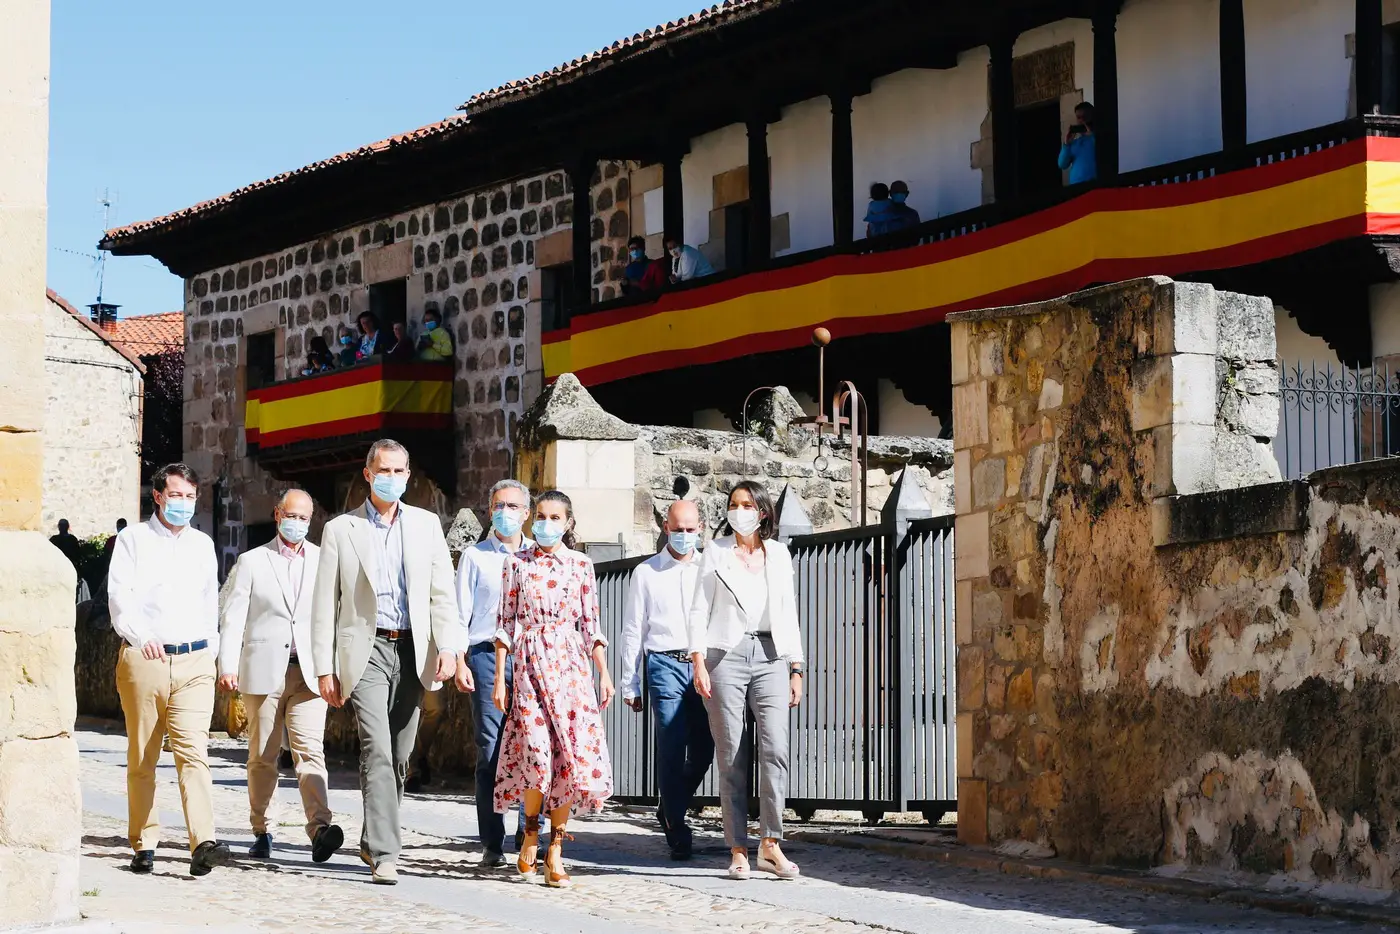 King Felipe and Queen Letizia of Spain arrived in Vinuesa